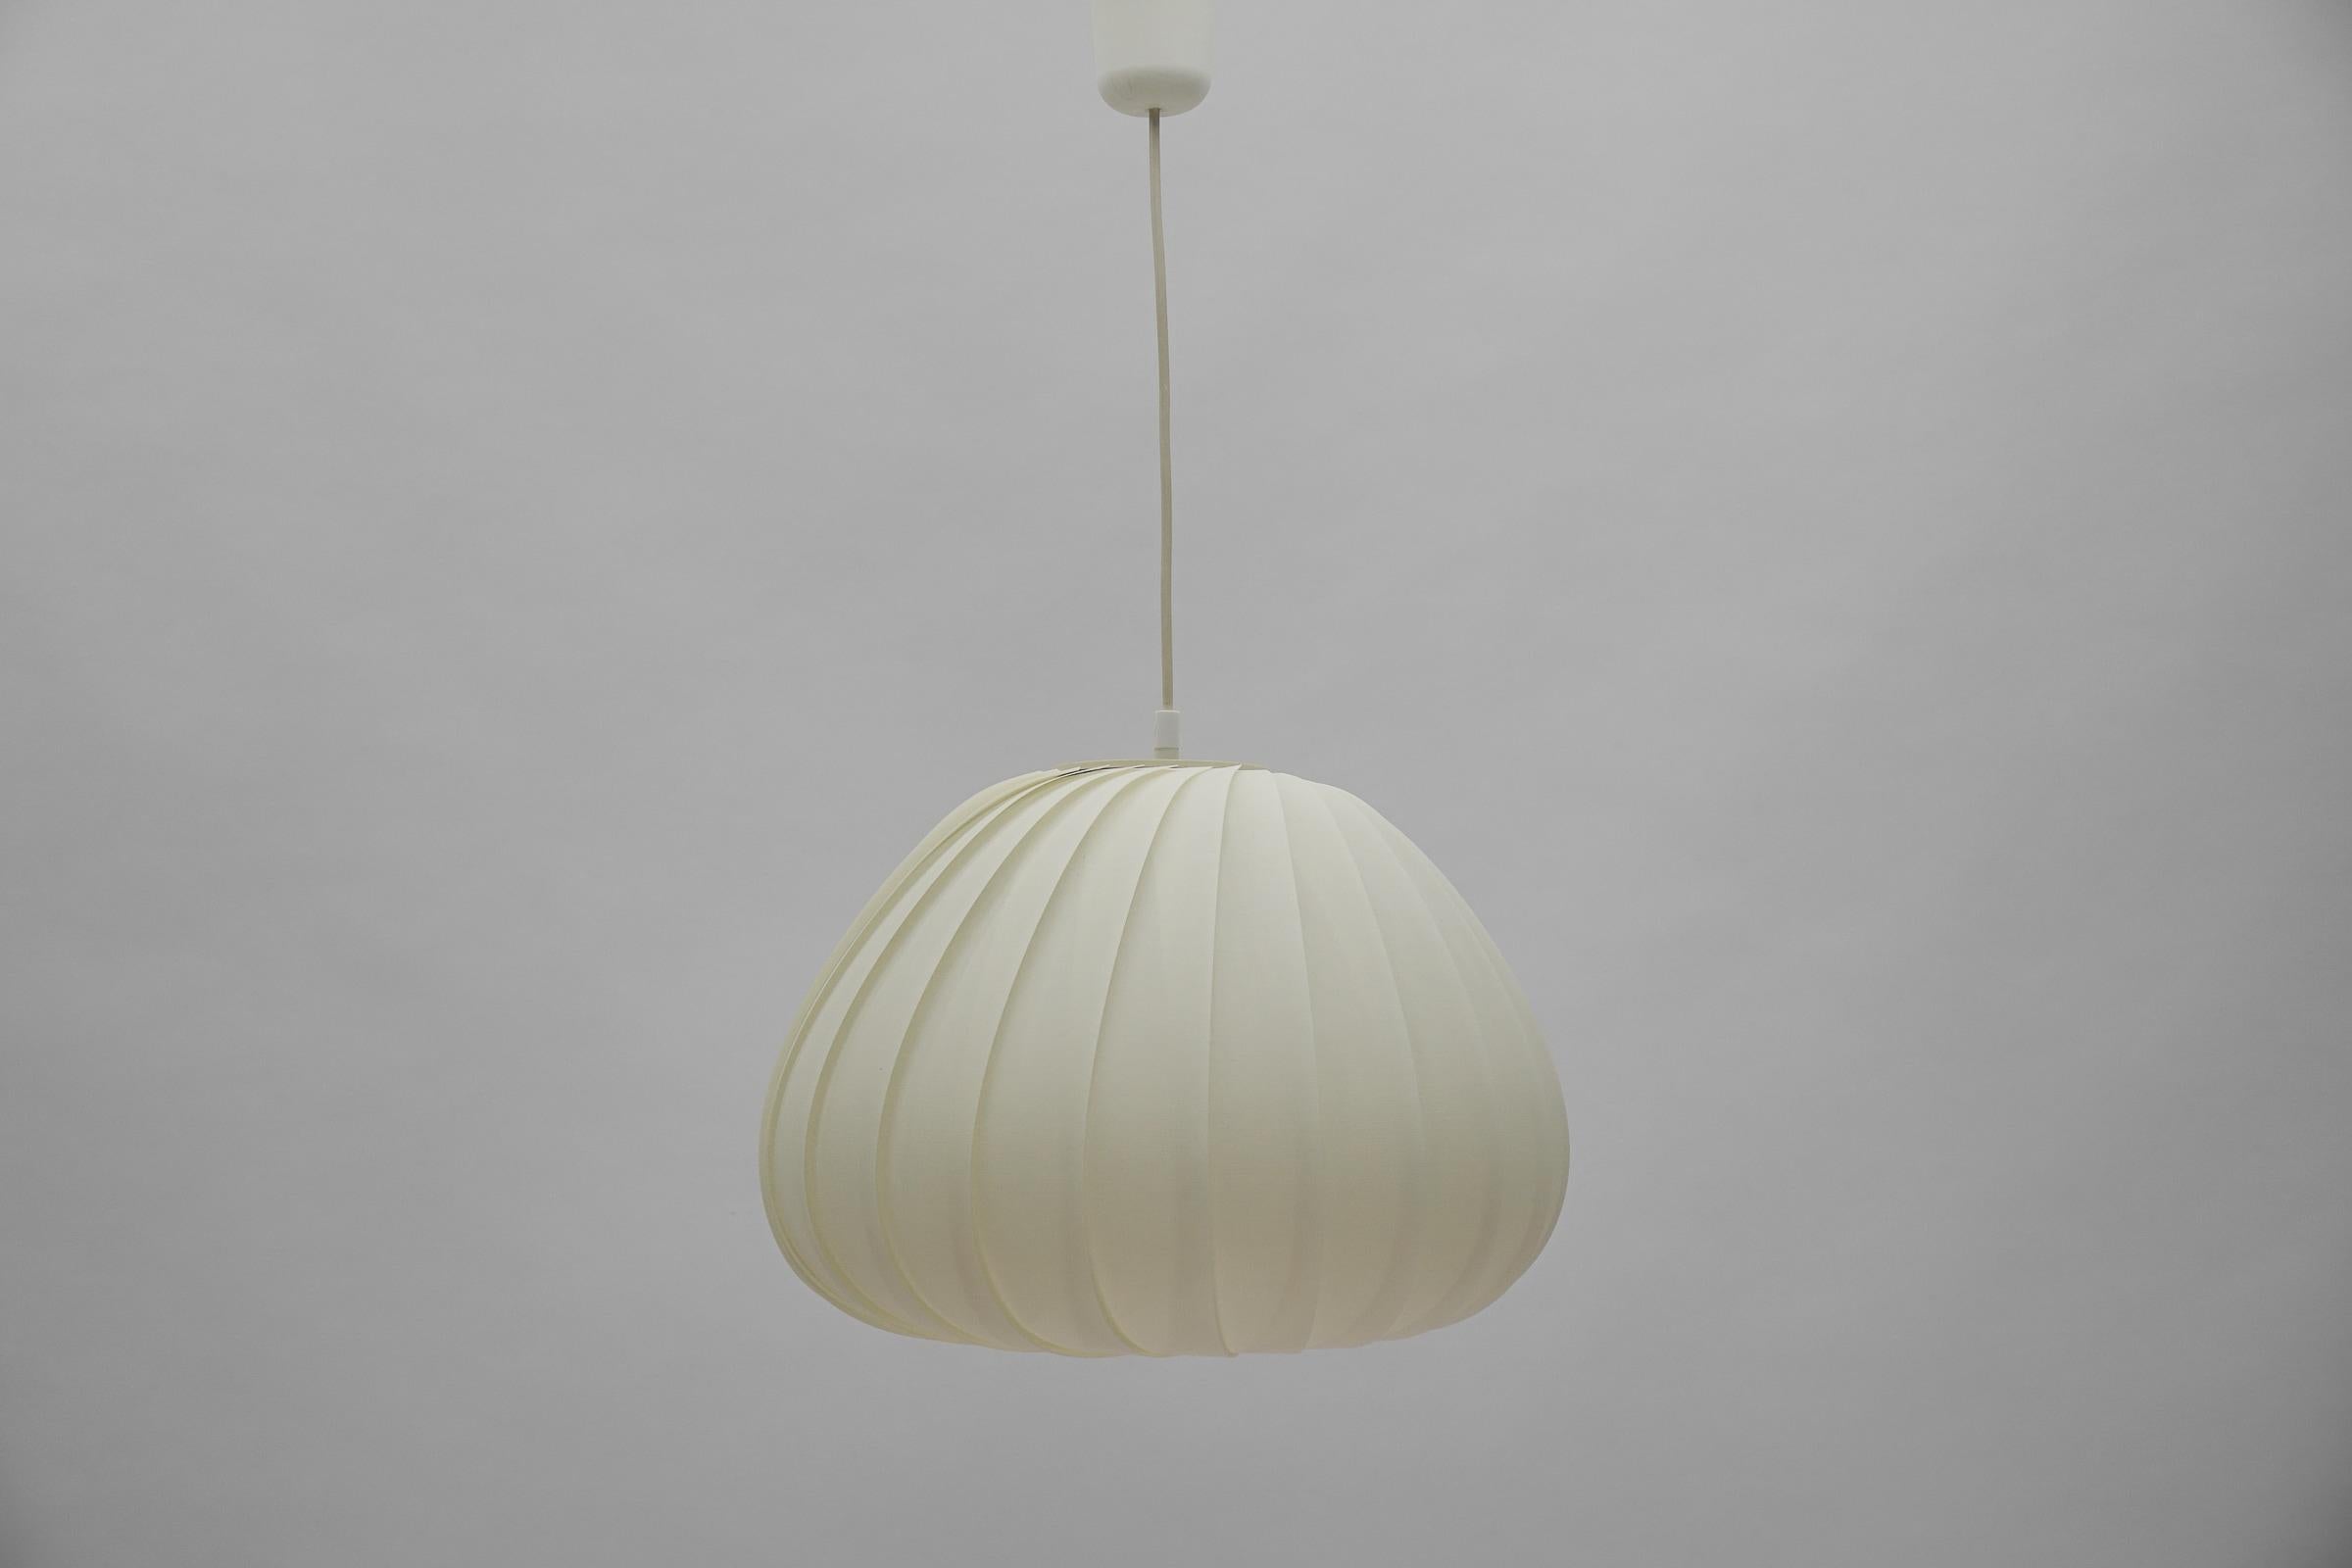 Plastic Scandinavian Space Age Slat Lamp, 1960s For Sale